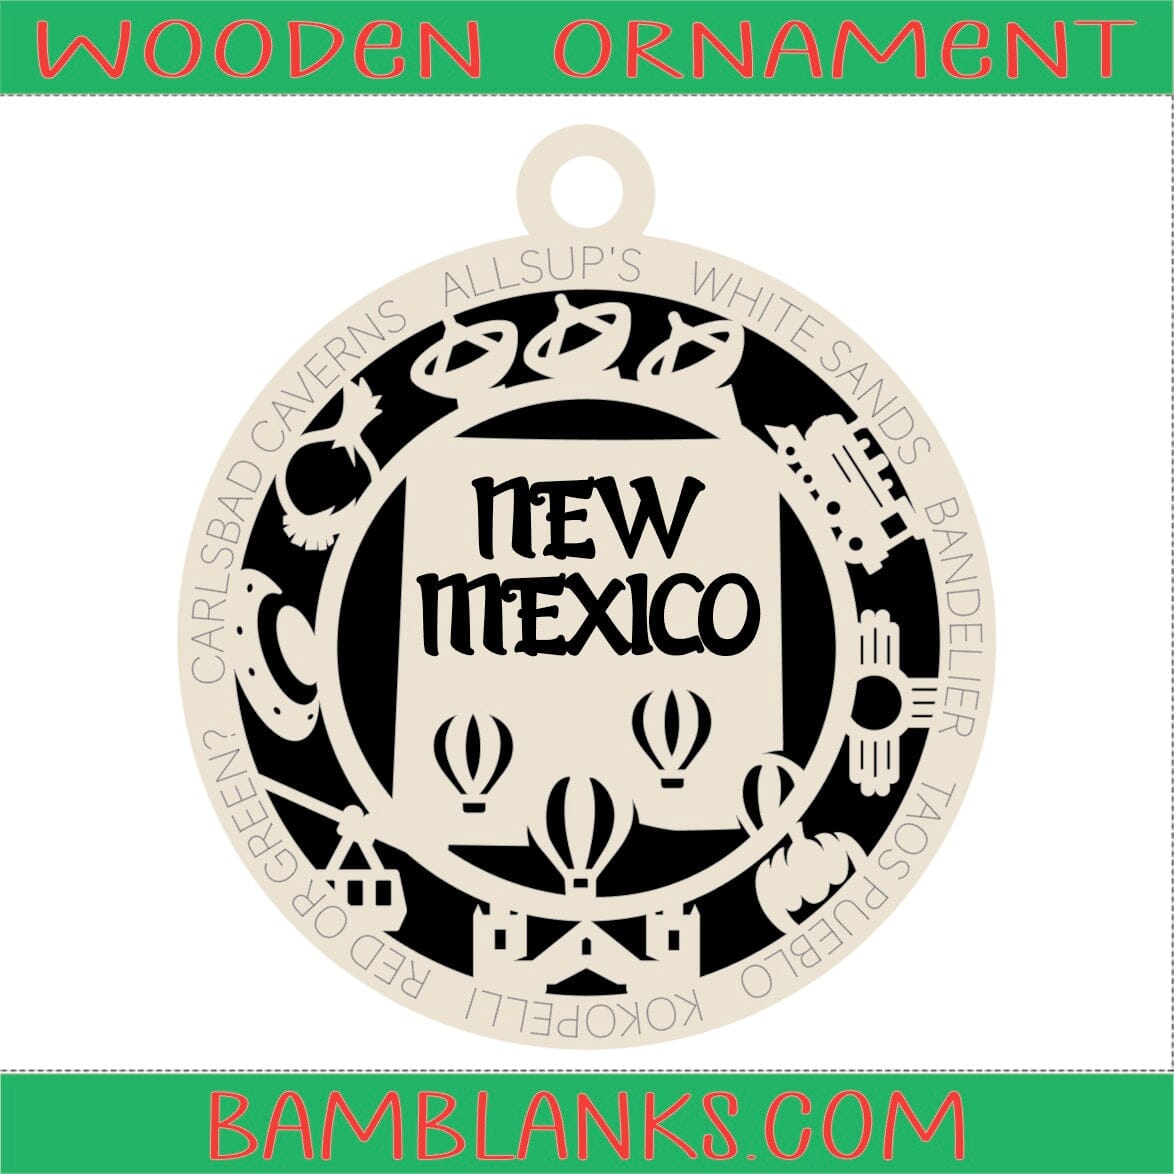 New Mexico - Wood Ornament #W082